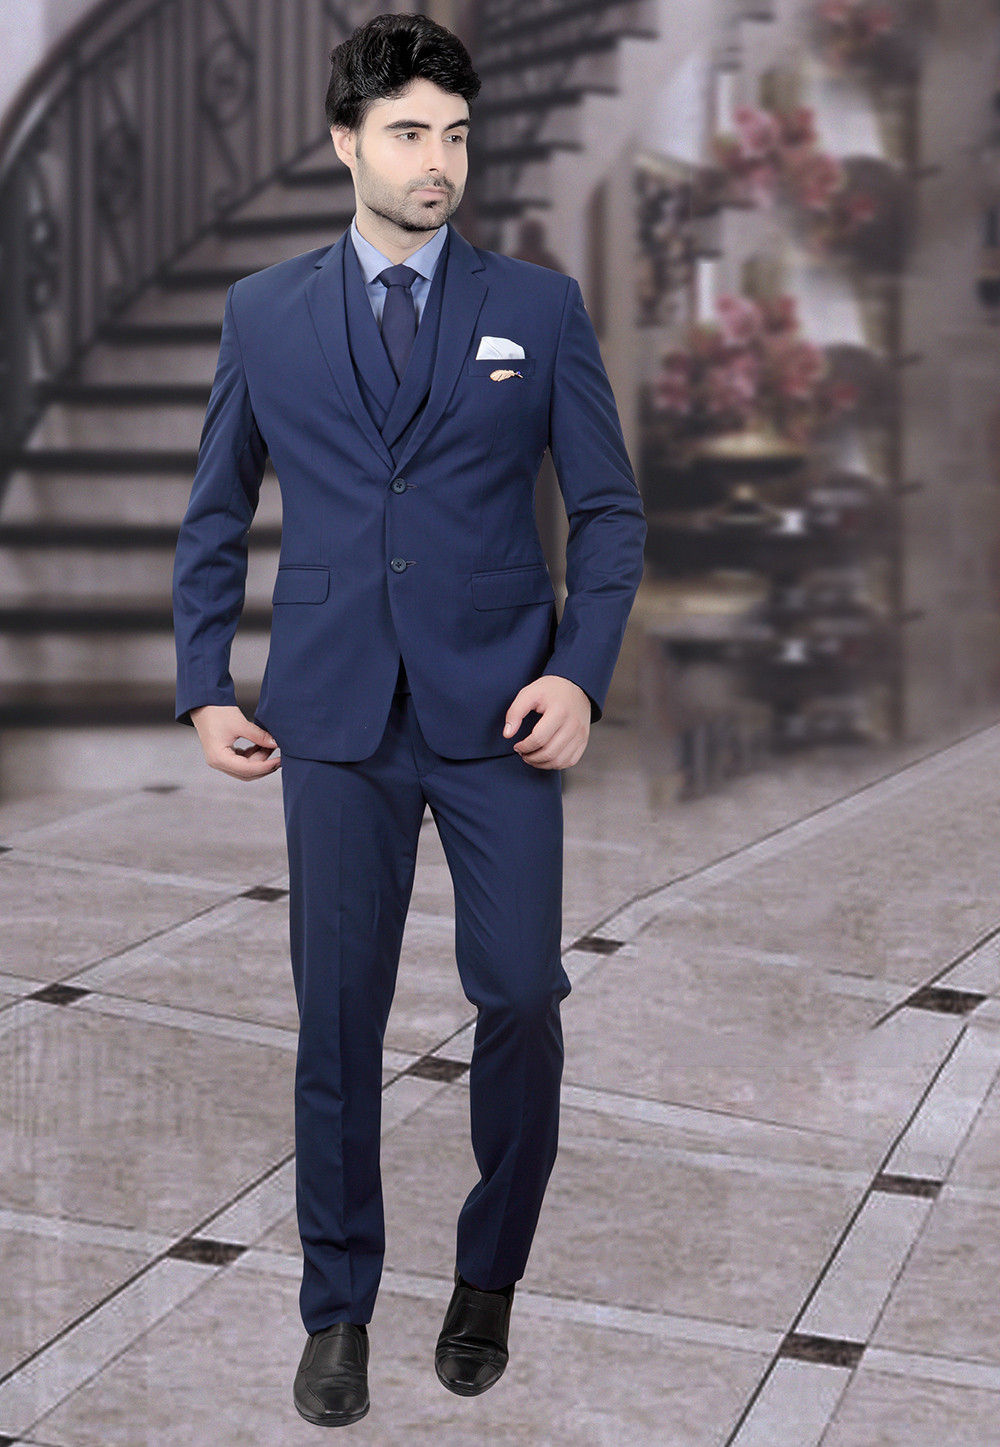 Buy Plain Terry Rayon Suit in Dark Blue Online : MHG1261 - Utsav Fashion